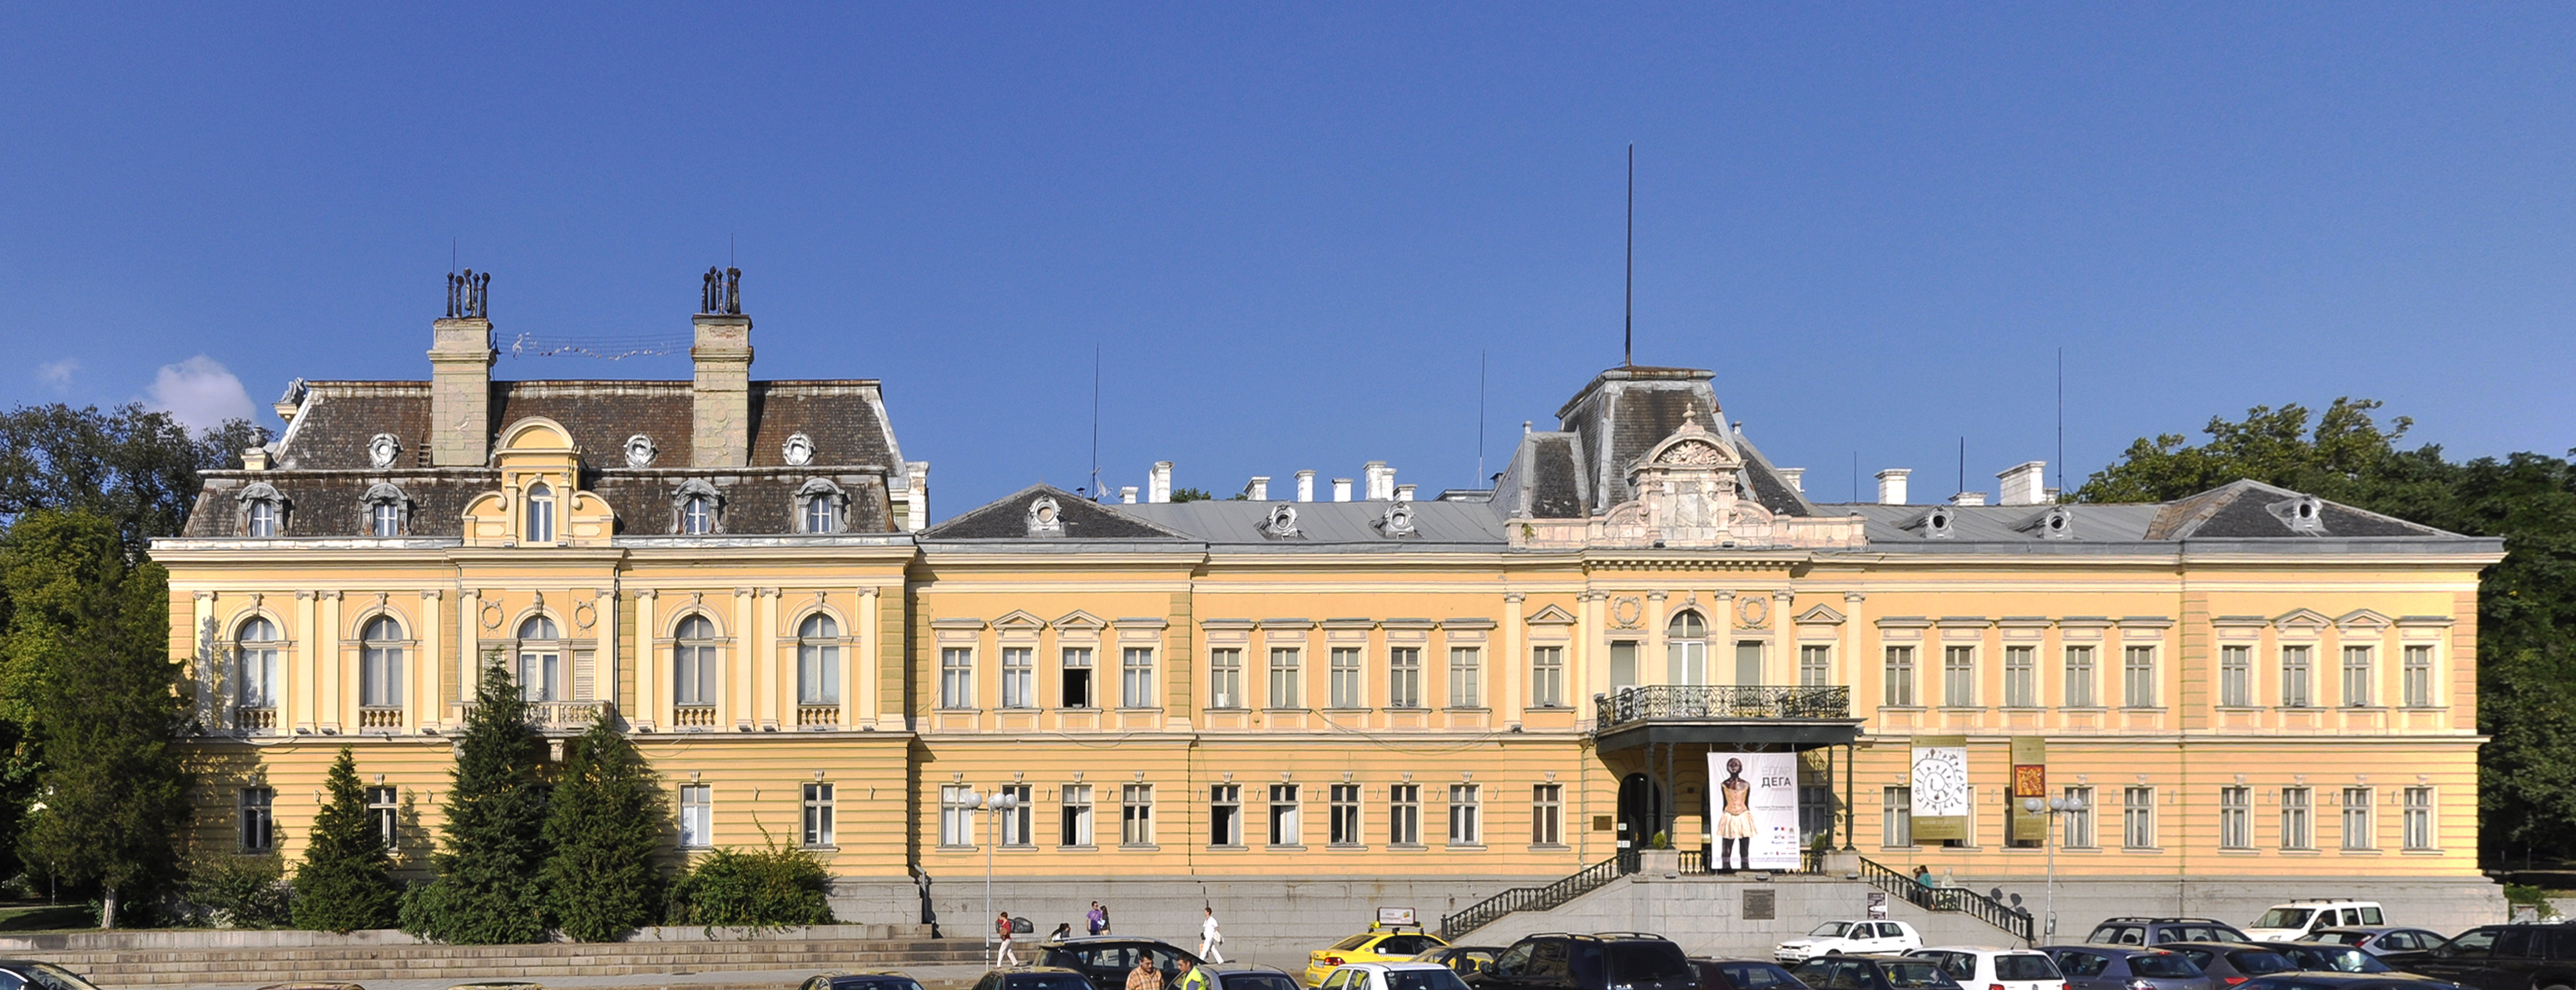 File:Tzar's Palace Sofia.jpg - Wikimedia Commons